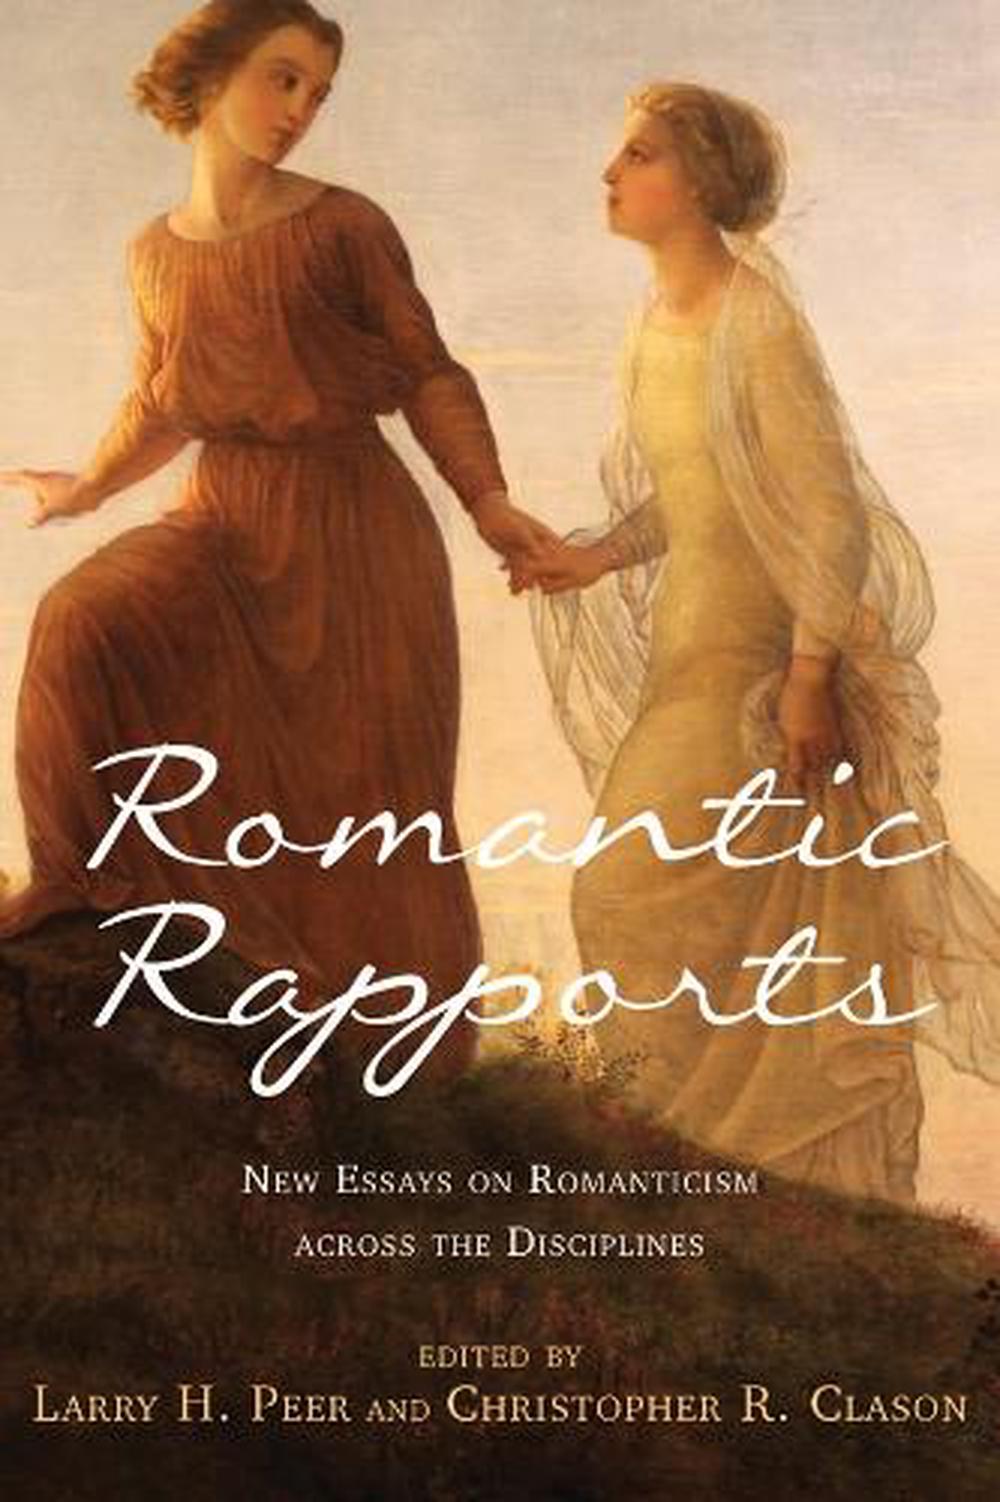 Essay on romanticism